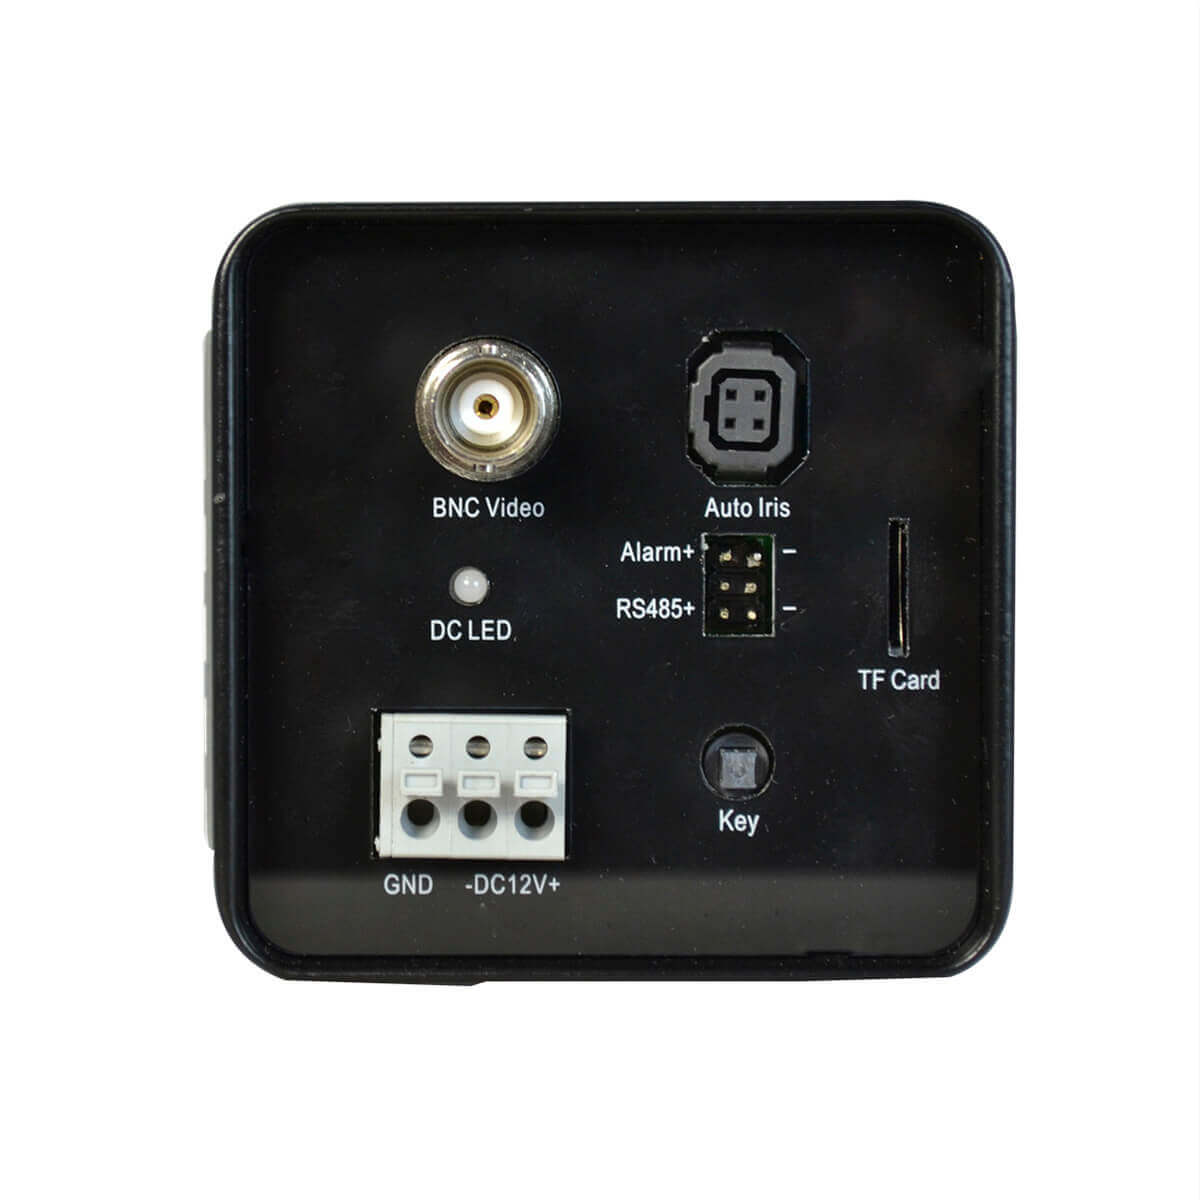 Camara para interiores tipo box con deteccion de rostro, CCD SHARP 560TV D1, Flow Counting